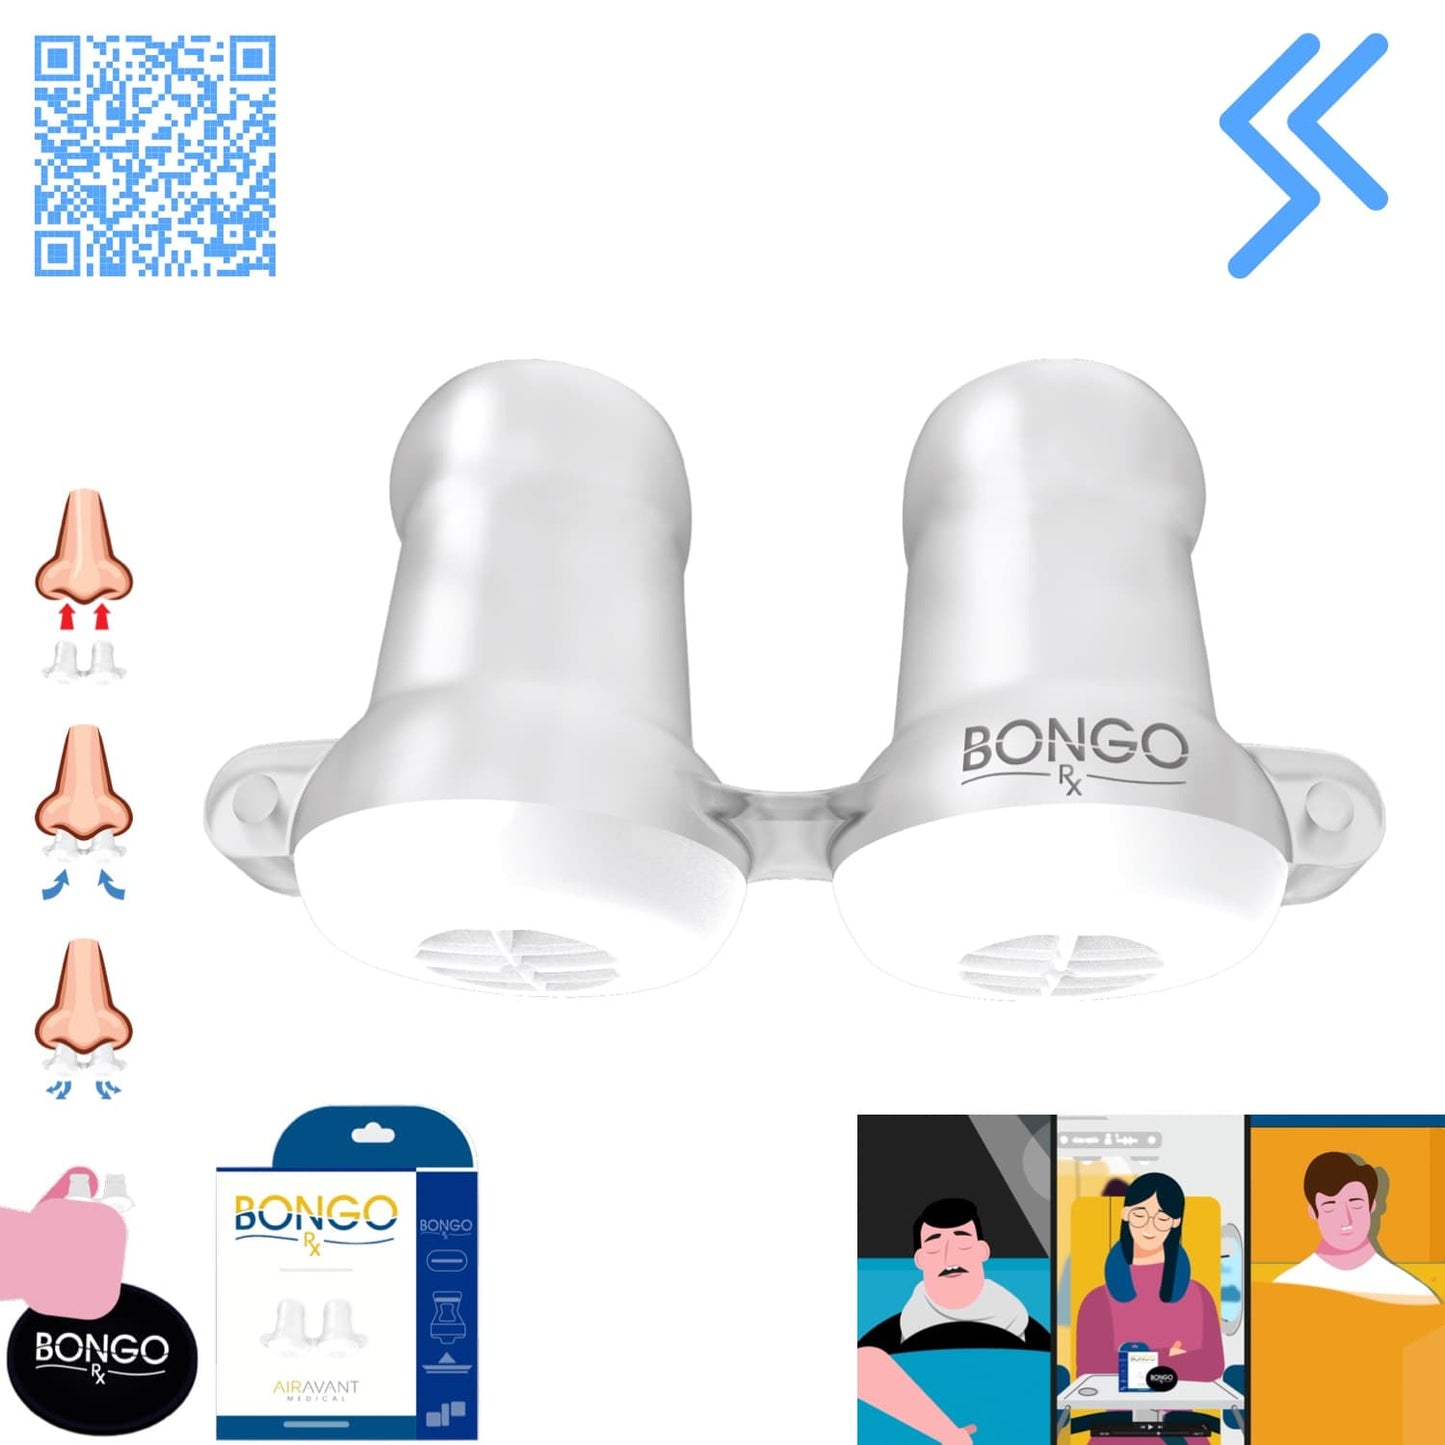 Starter Kit Bongo Rx - info